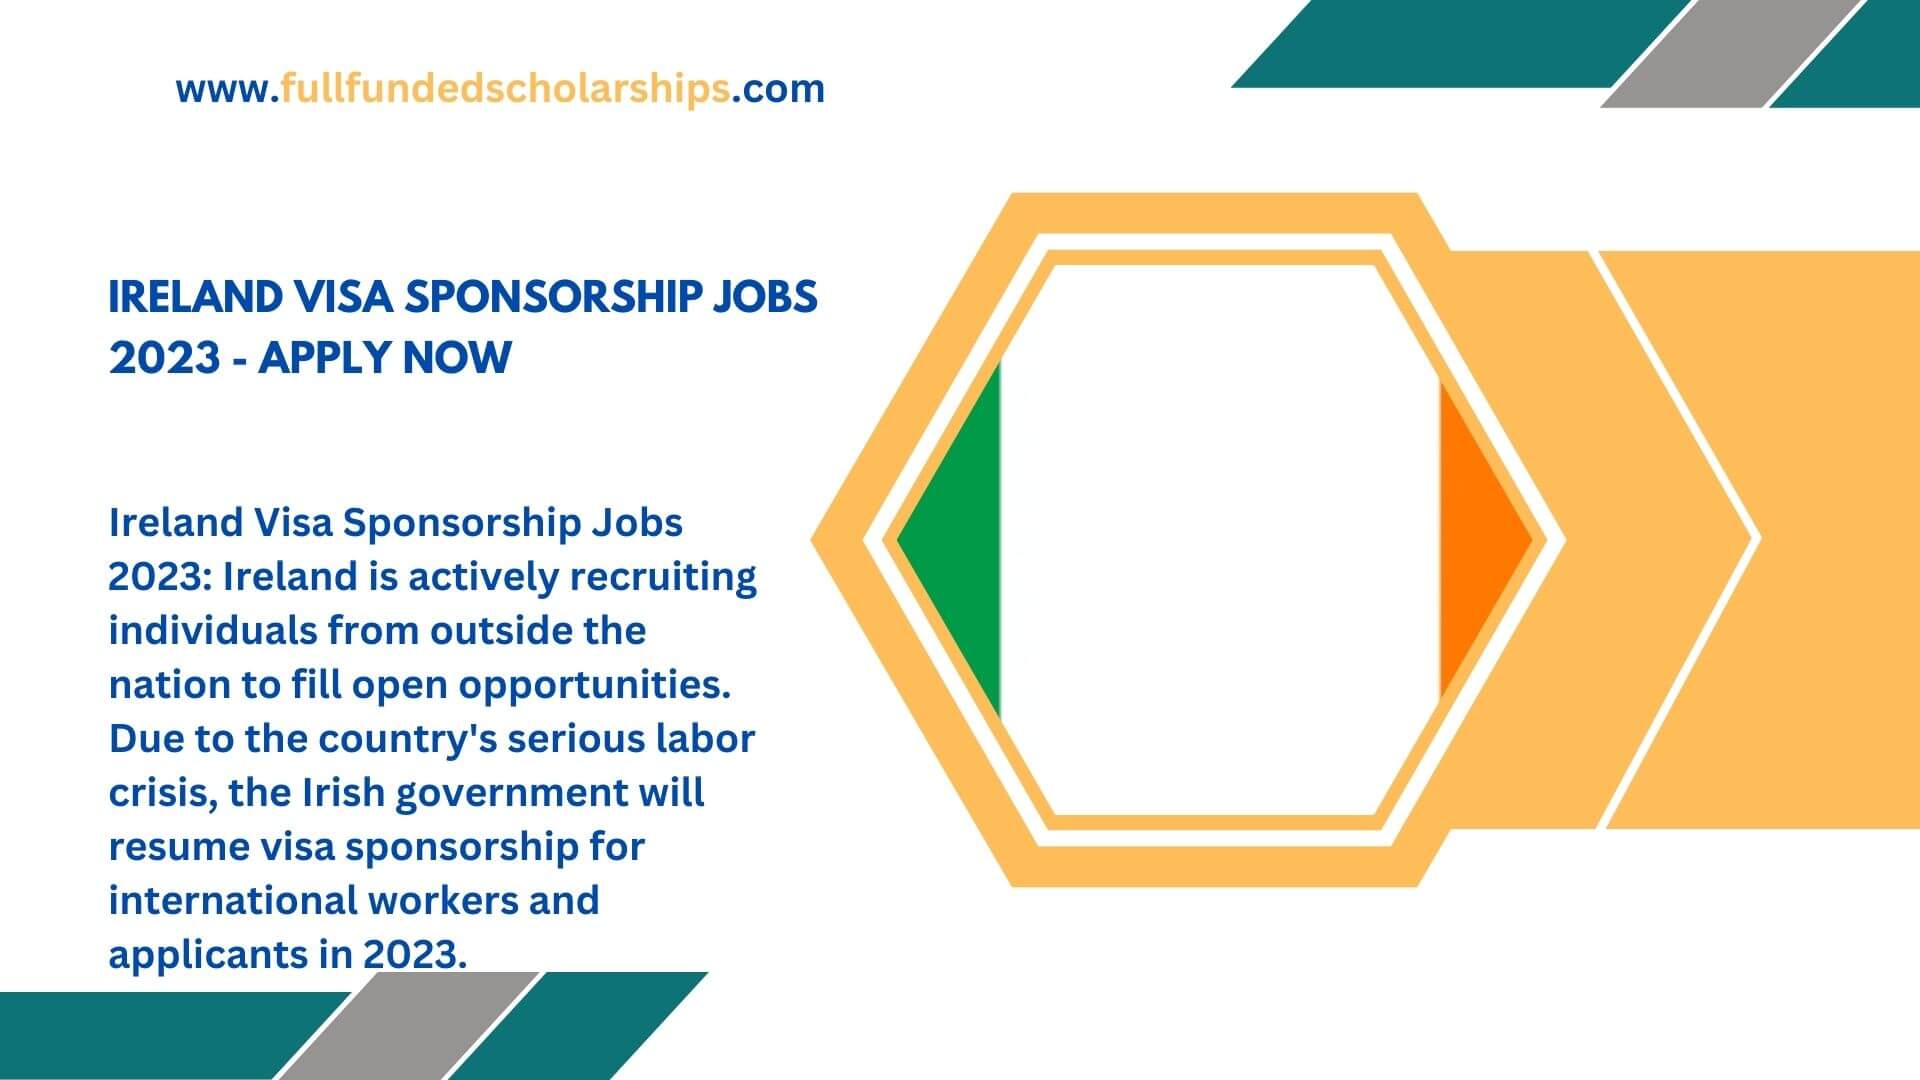 Ireland Visa Sponsorship Jobs 2023 - Apply Now